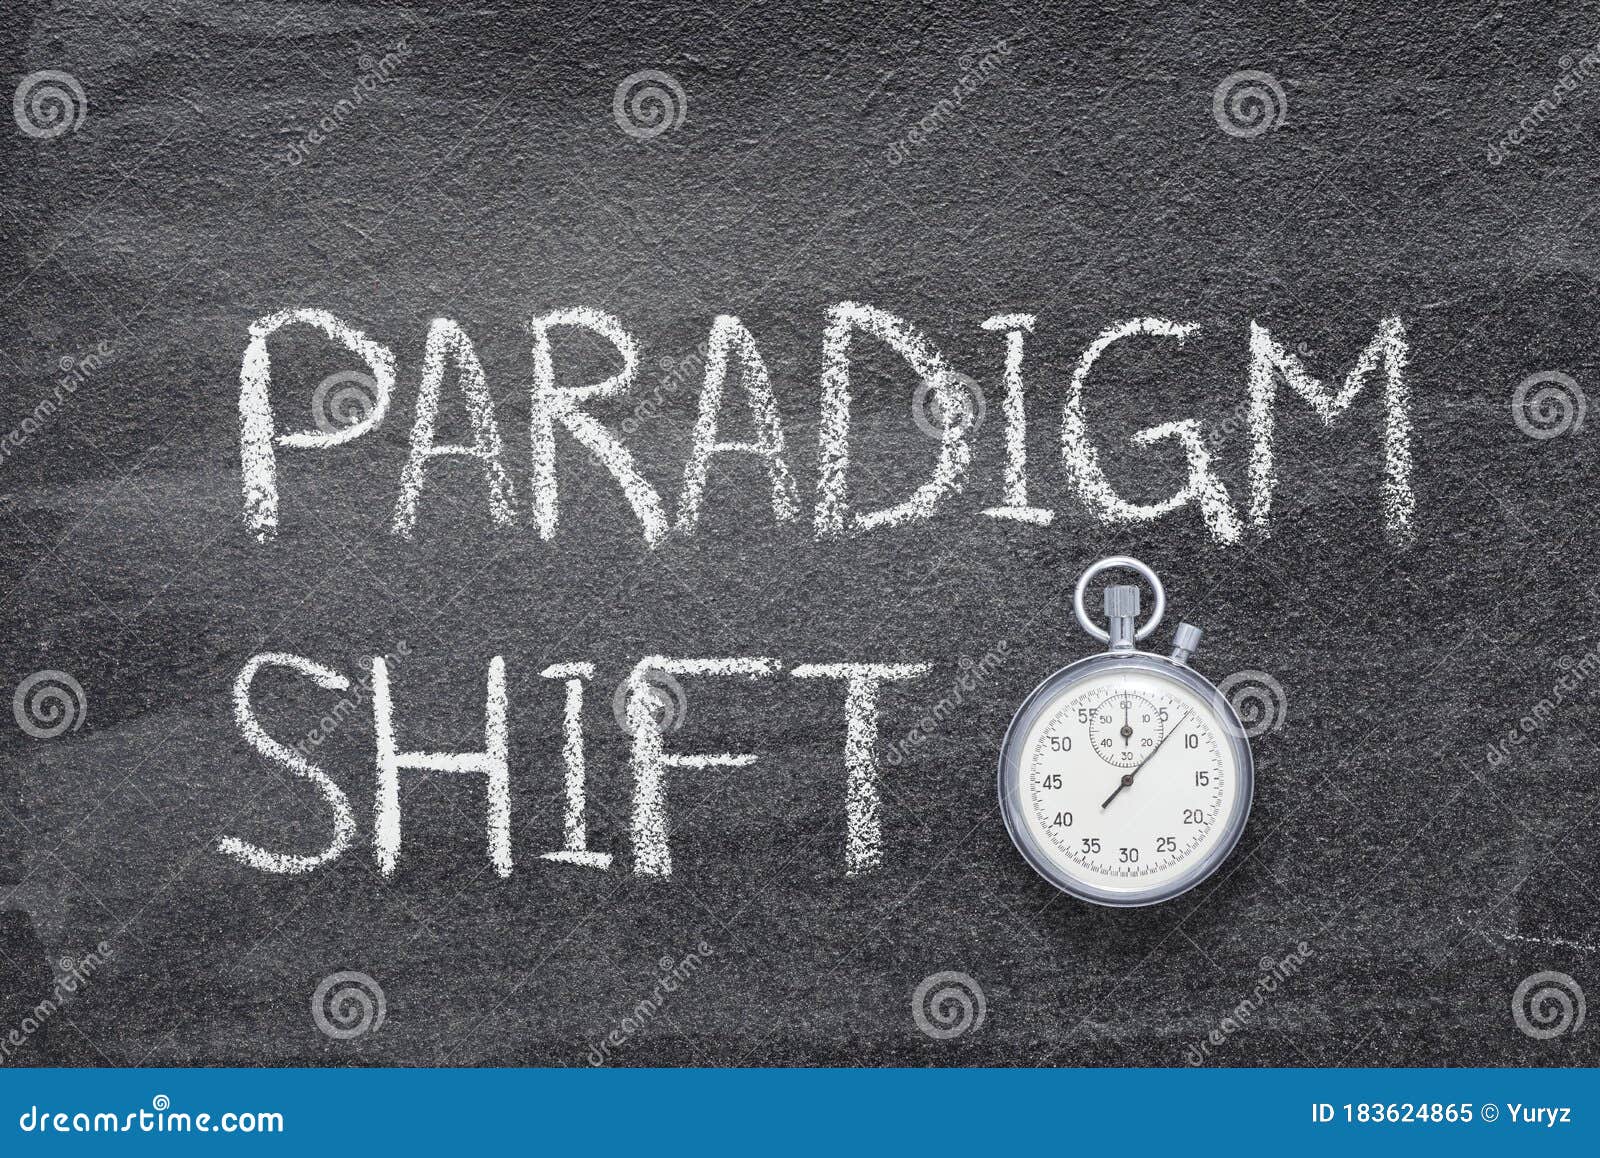 paradigm shift watch